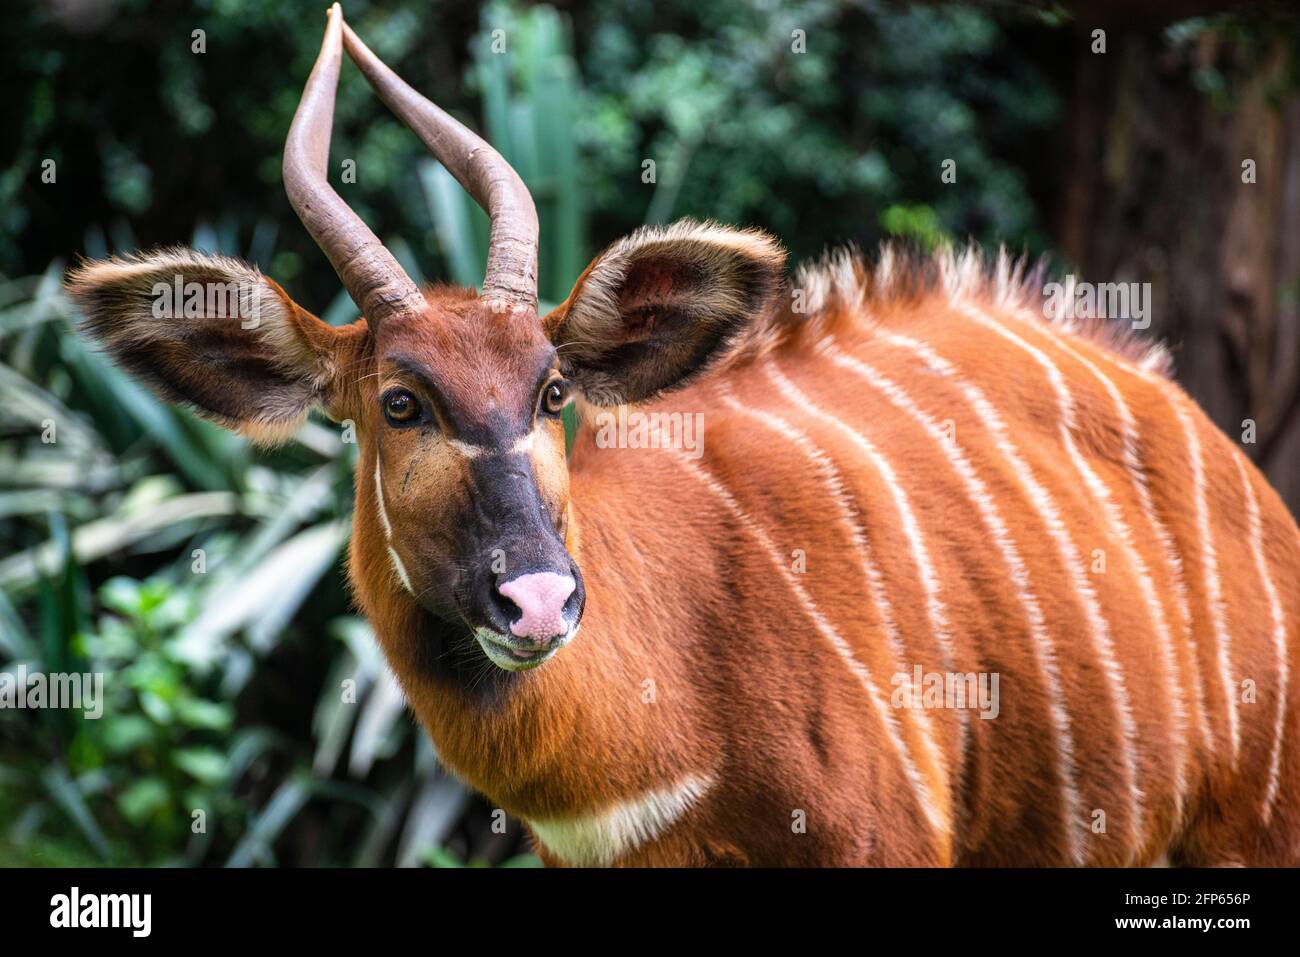 Bongo antelope kenya africa hi-res stock photography and images - Alamy